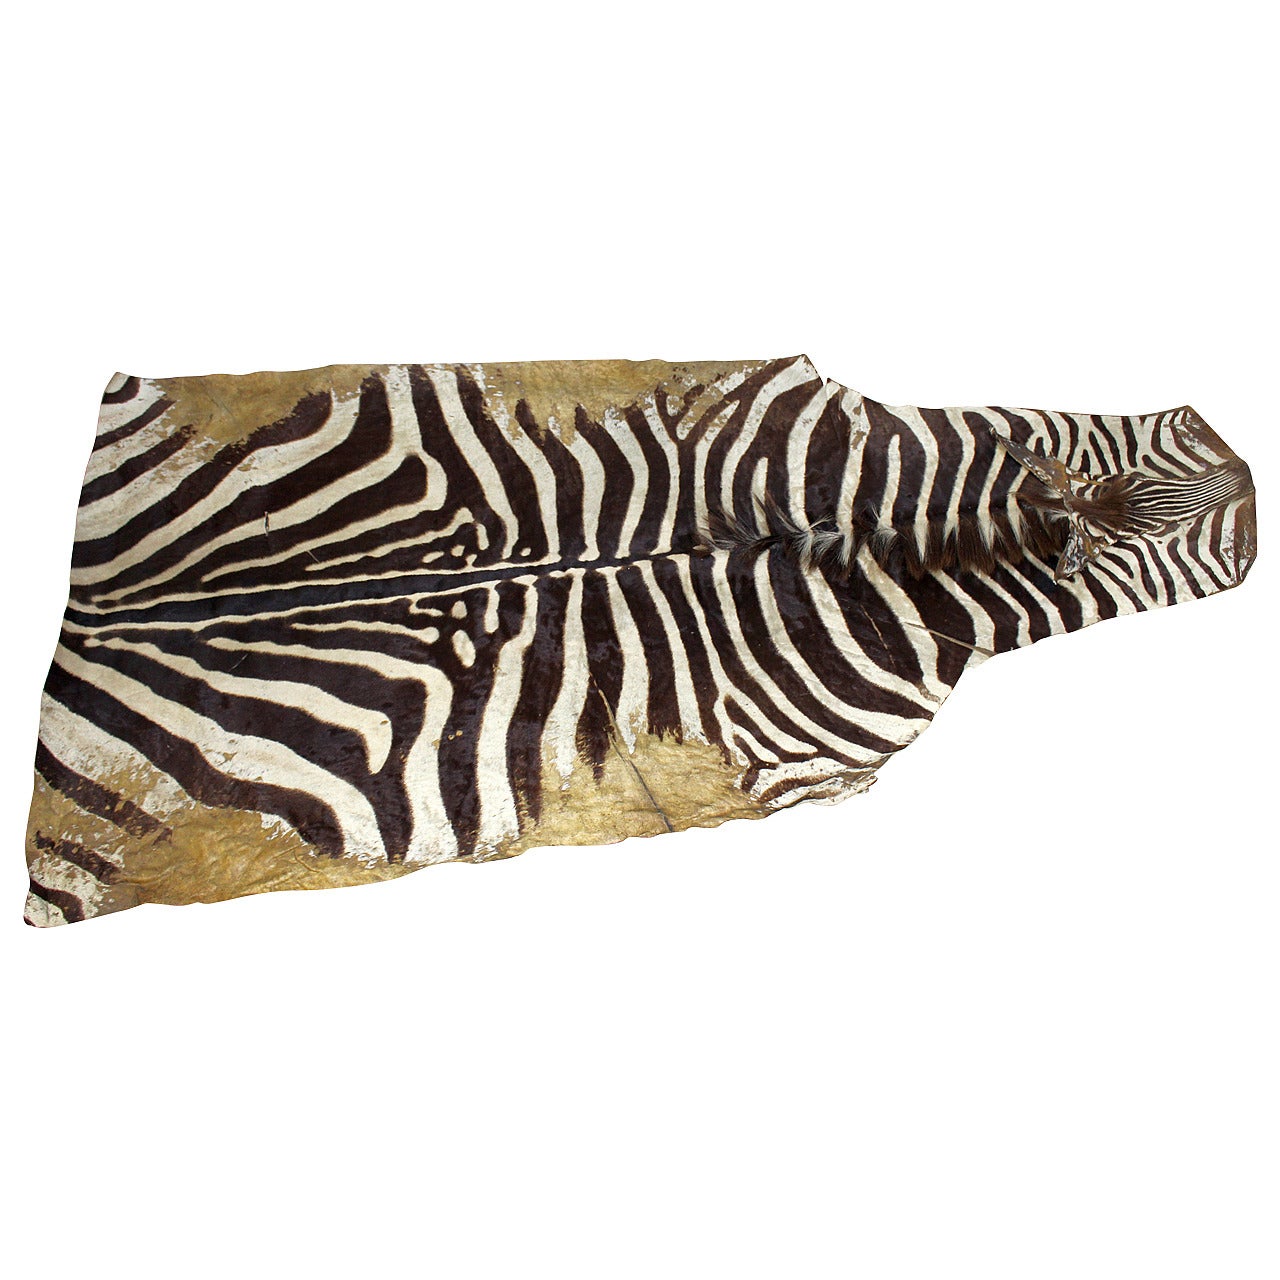 Antique Zebra Skin Rug